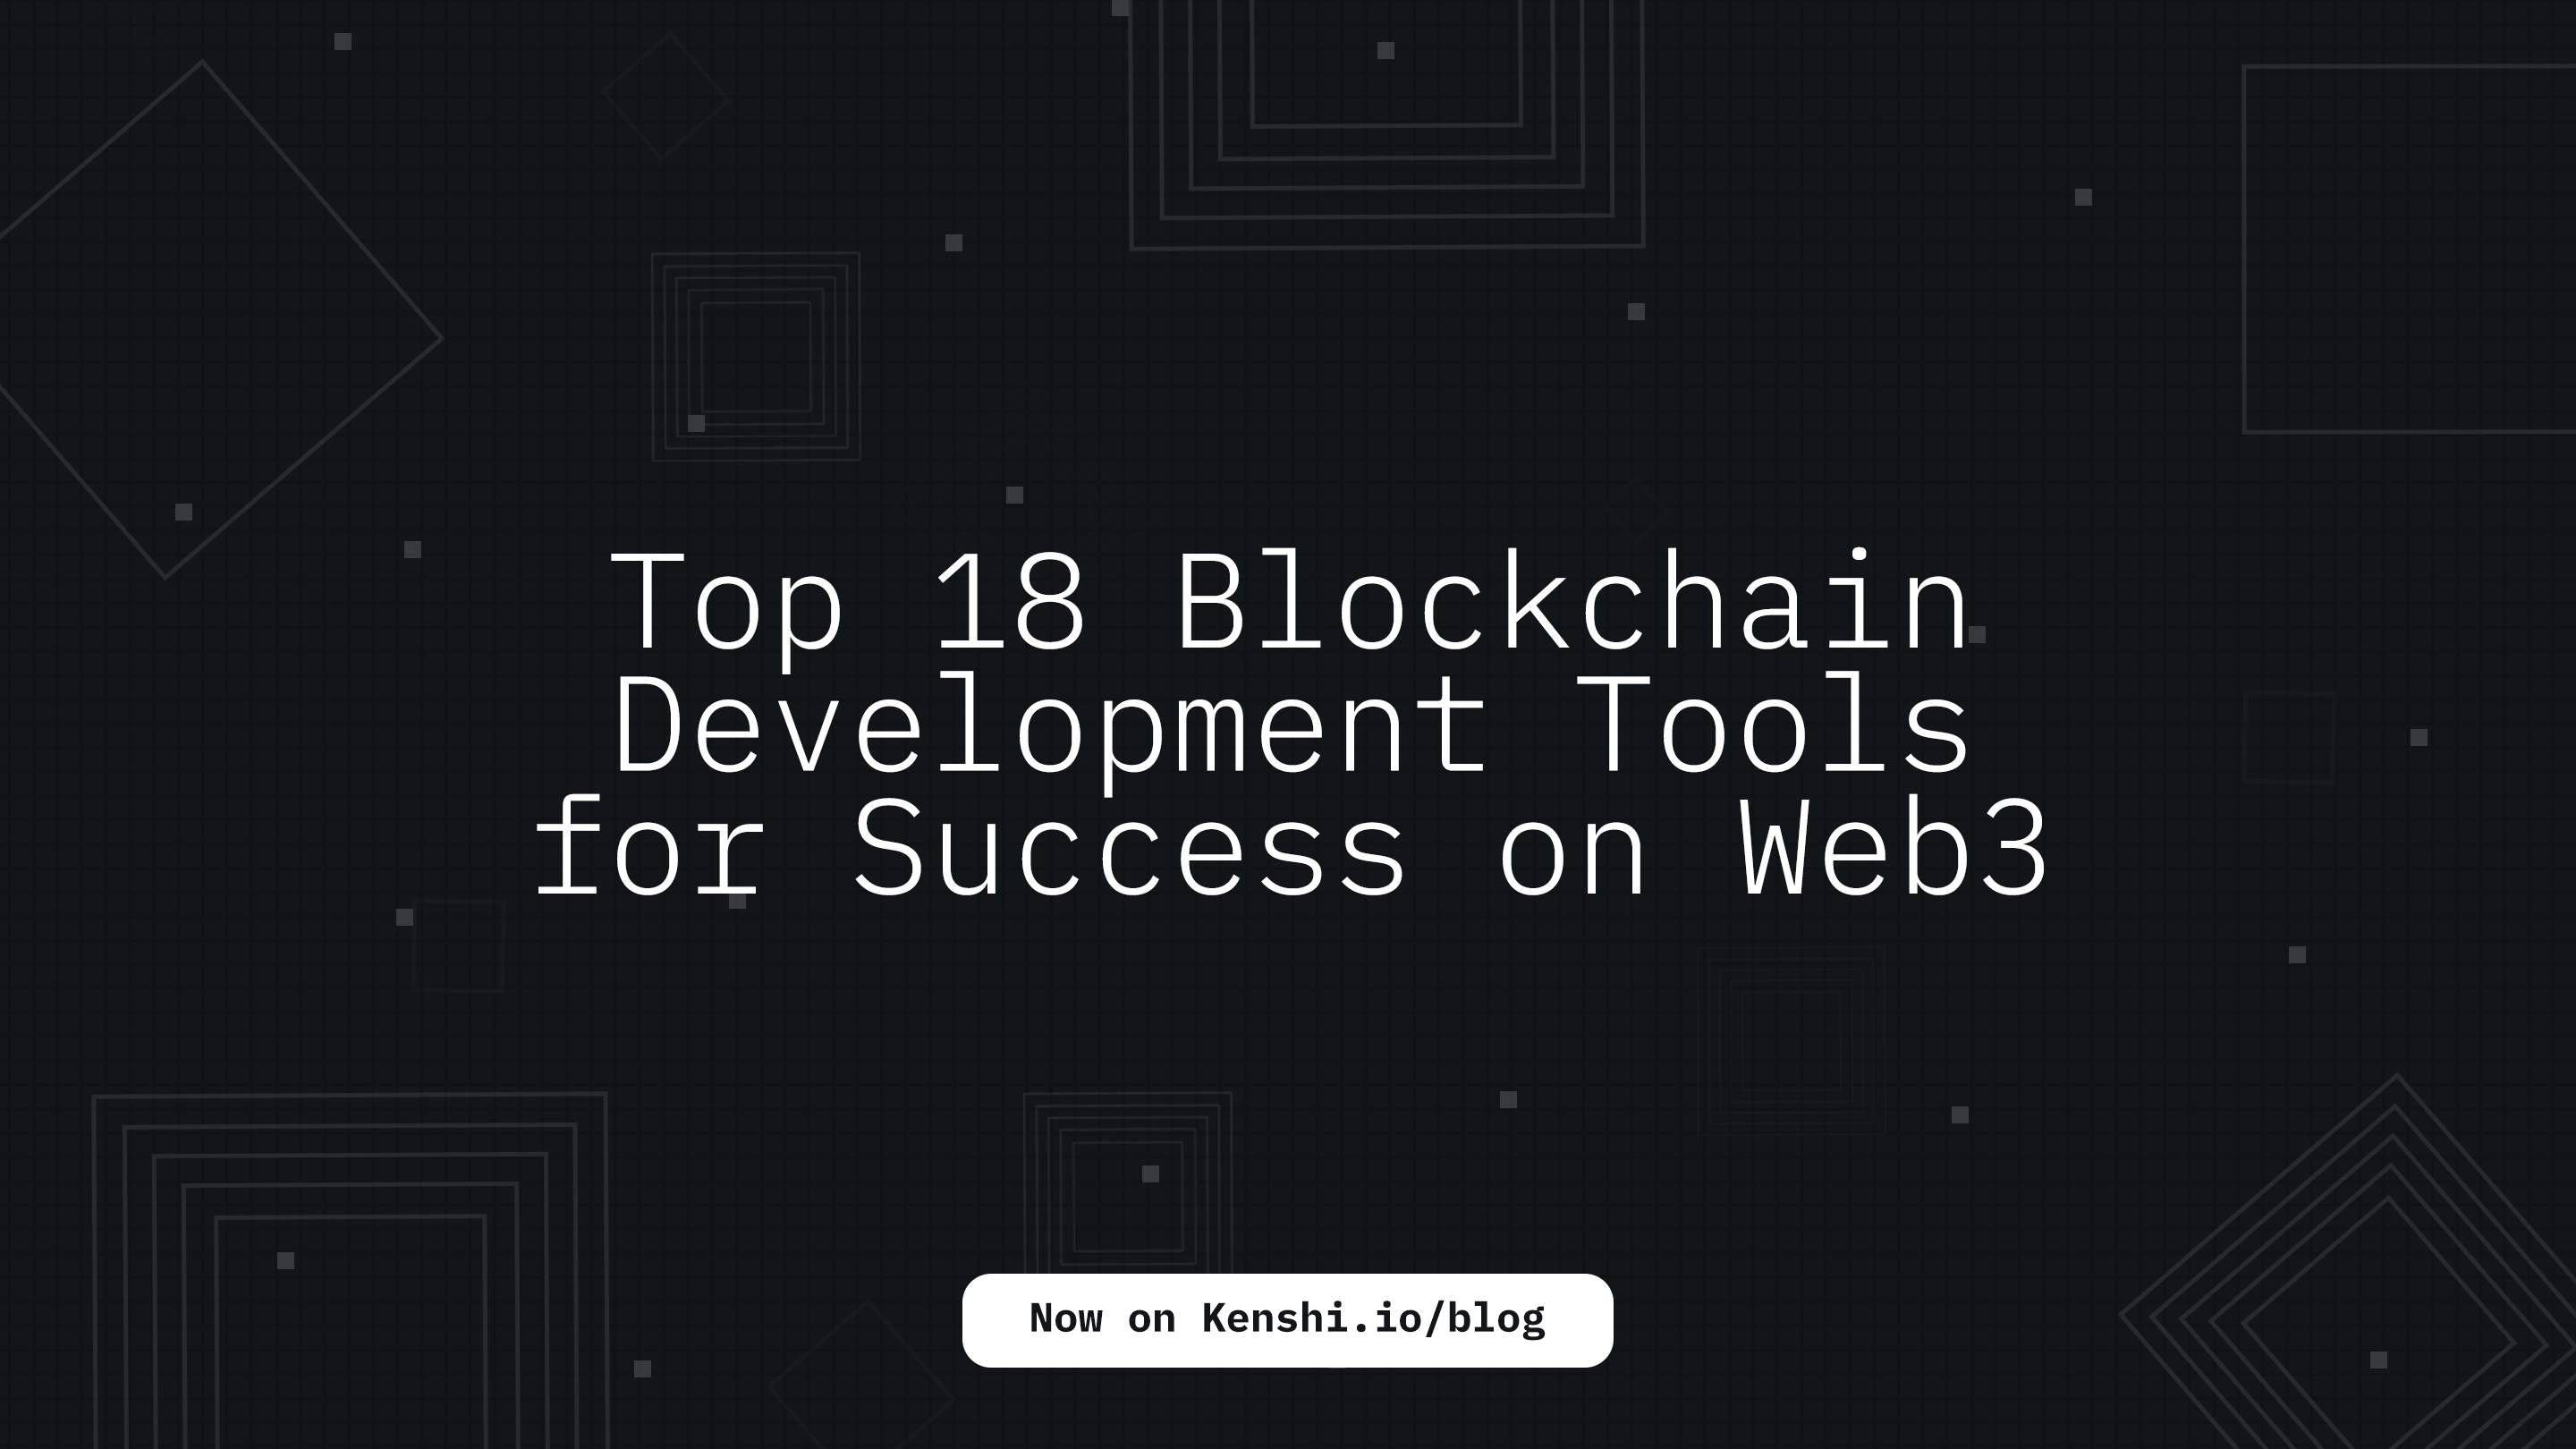 Top 18 Blockchain Development Tools for Success on Web3